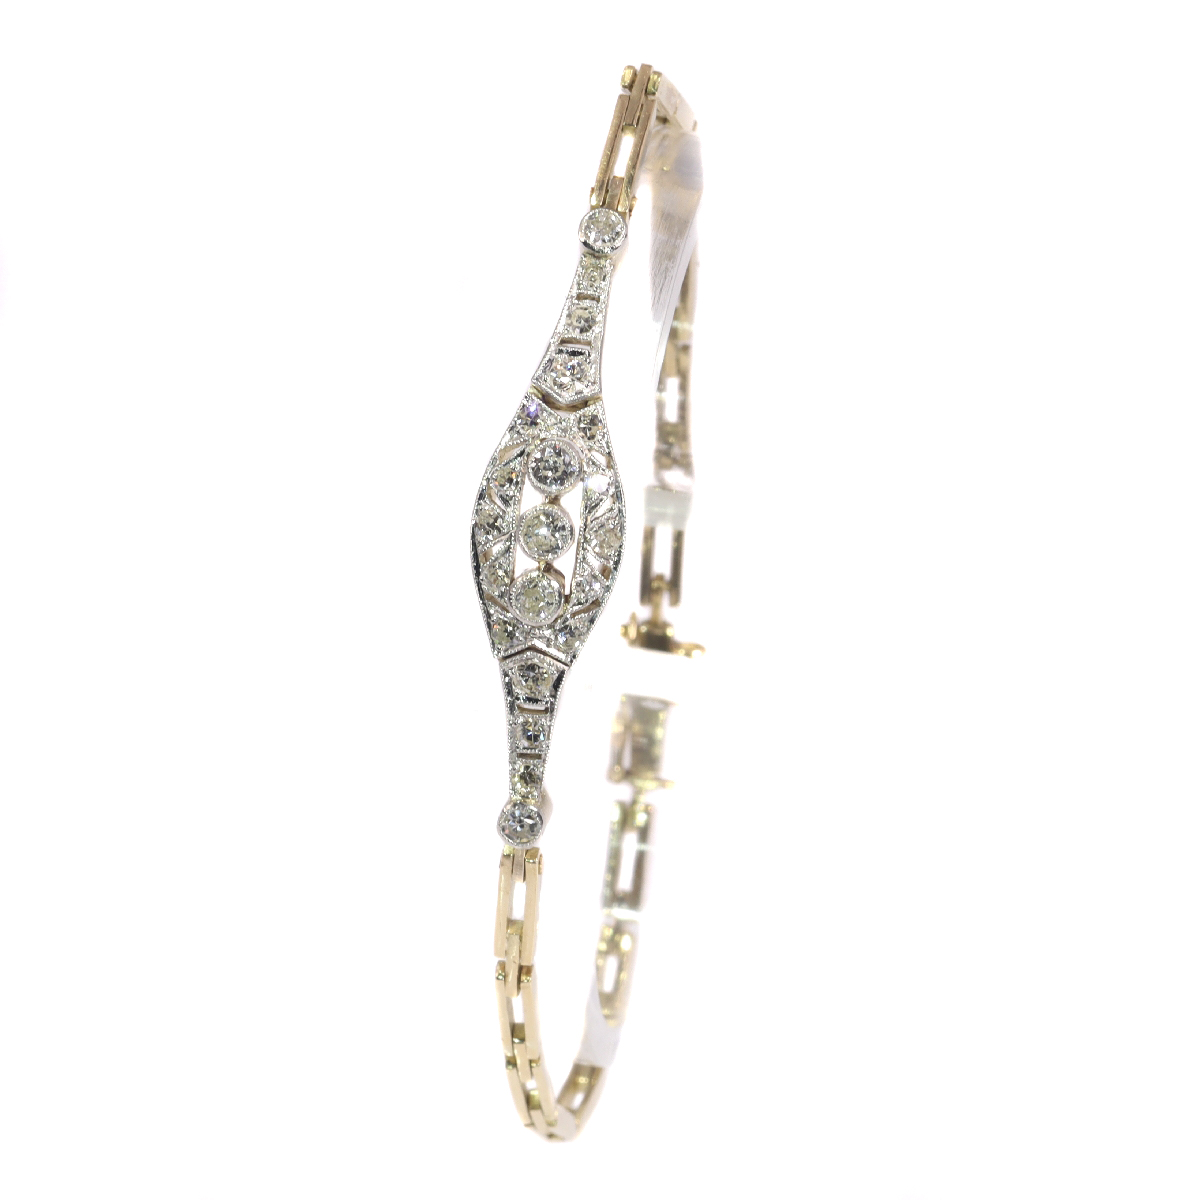 Diamond Art Deco bracelet, Images by Adin Antique Jewelry.